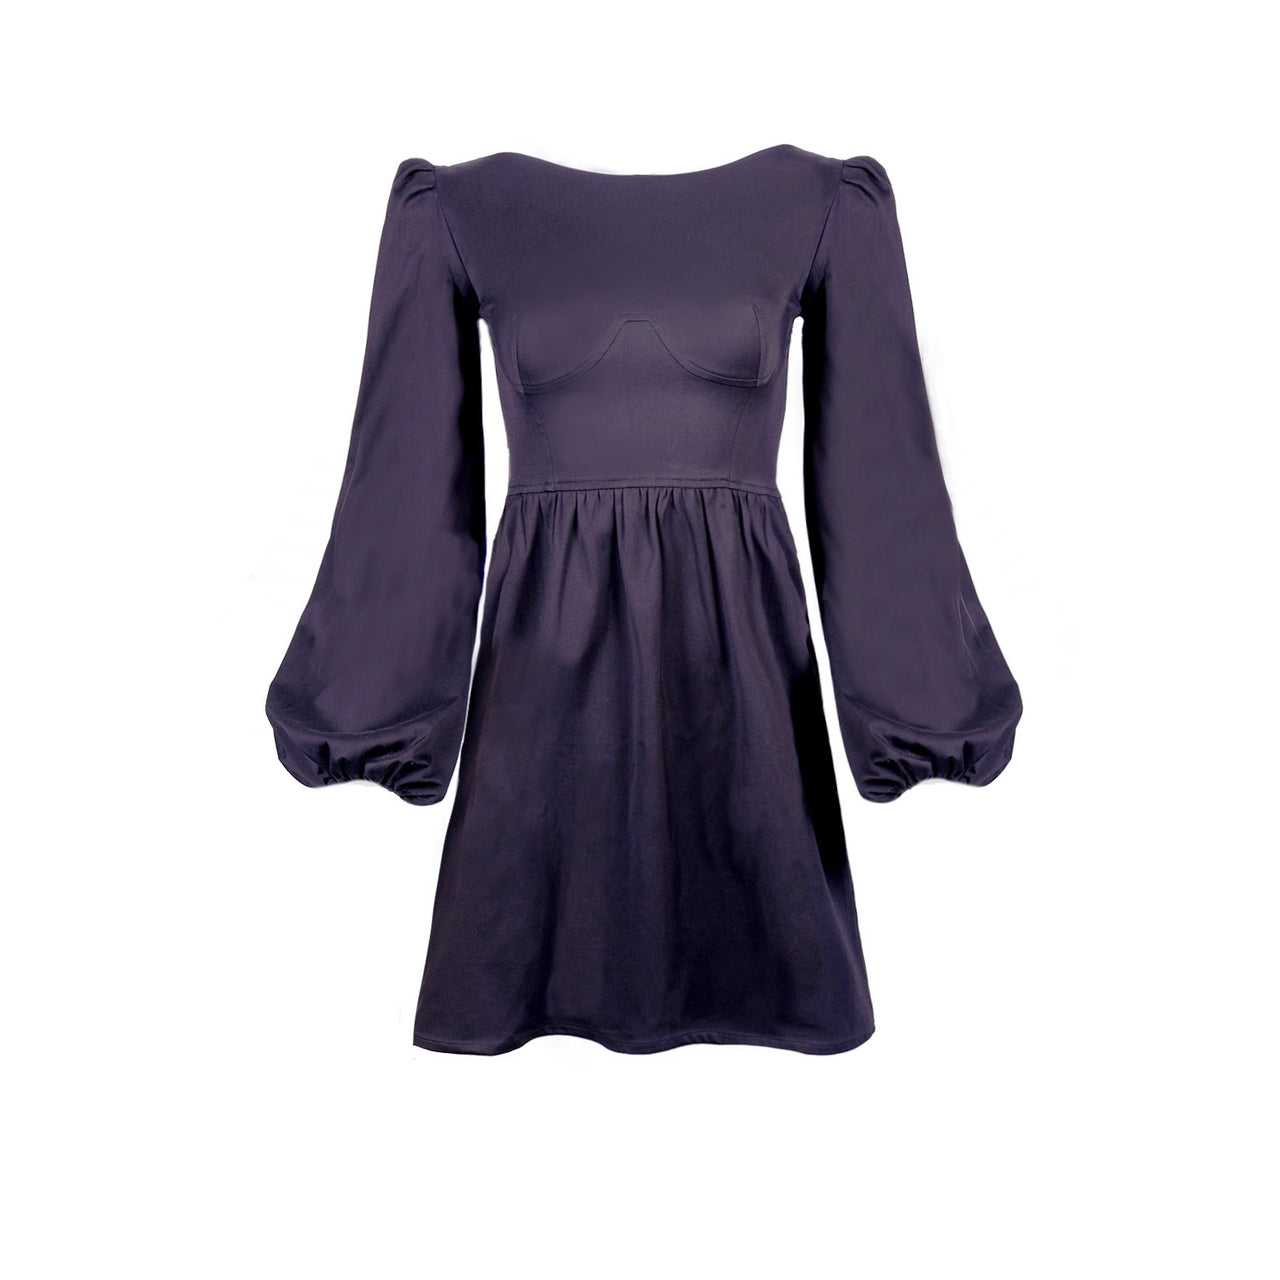 Sadie Bateau Neck Mini Dress with Corset Seam Details / Black Cotton